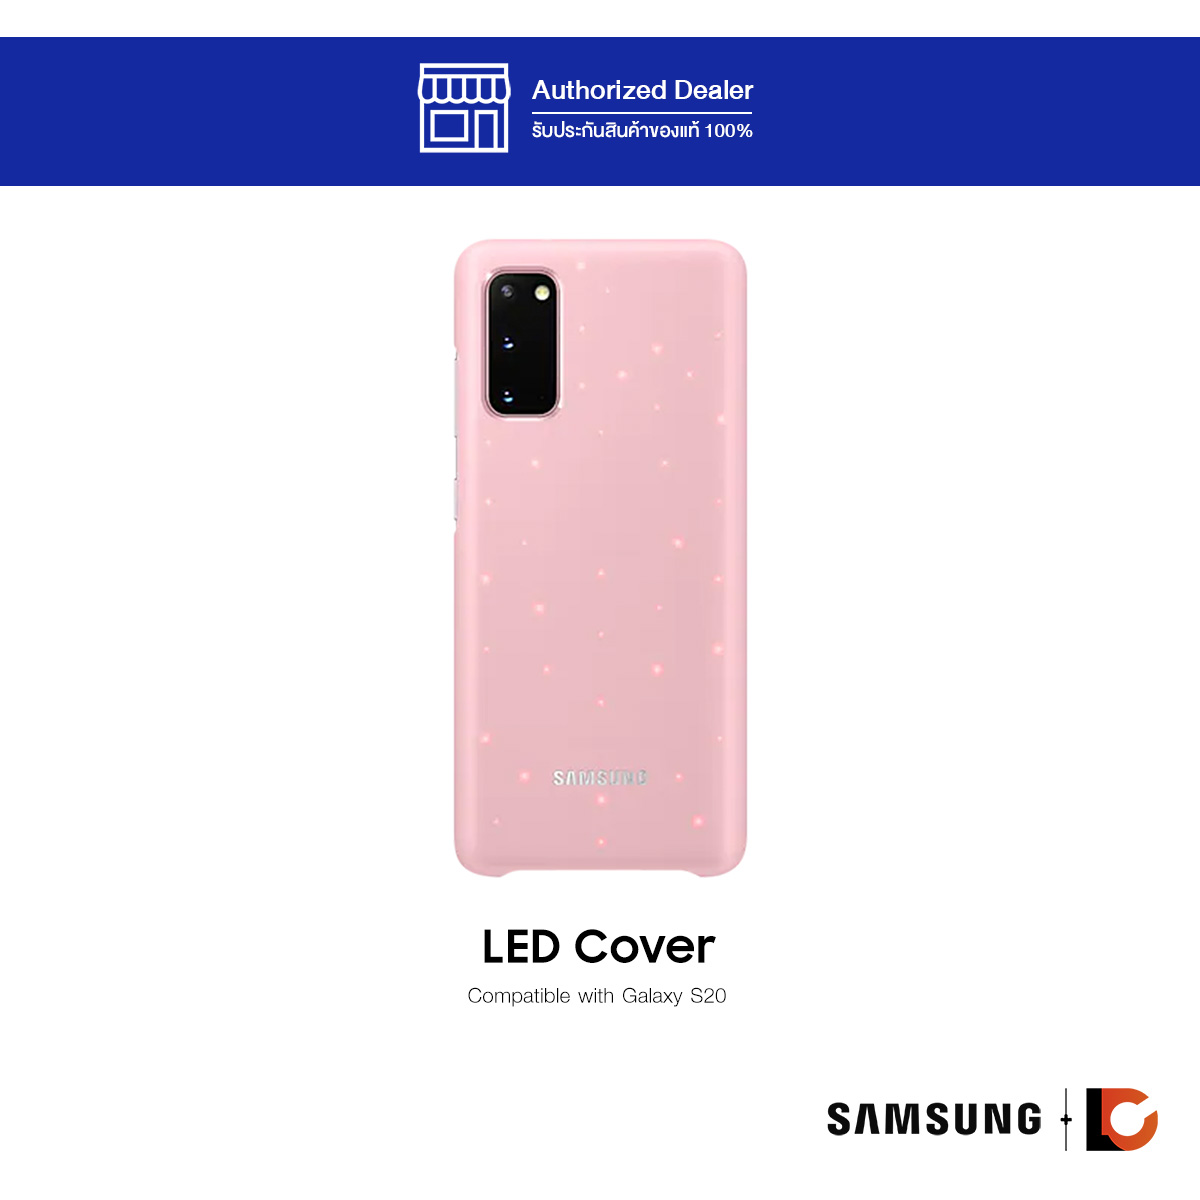 SAMSUNG Galaxy S20 LED Cover | เคสสำหรับ Galaxy S20 LED Cover *ไม่รวมตัวเครื่อง สี PINK สี PINKรูปแบบรุ่นที่ีรองรับ Samsung Galaxy S20